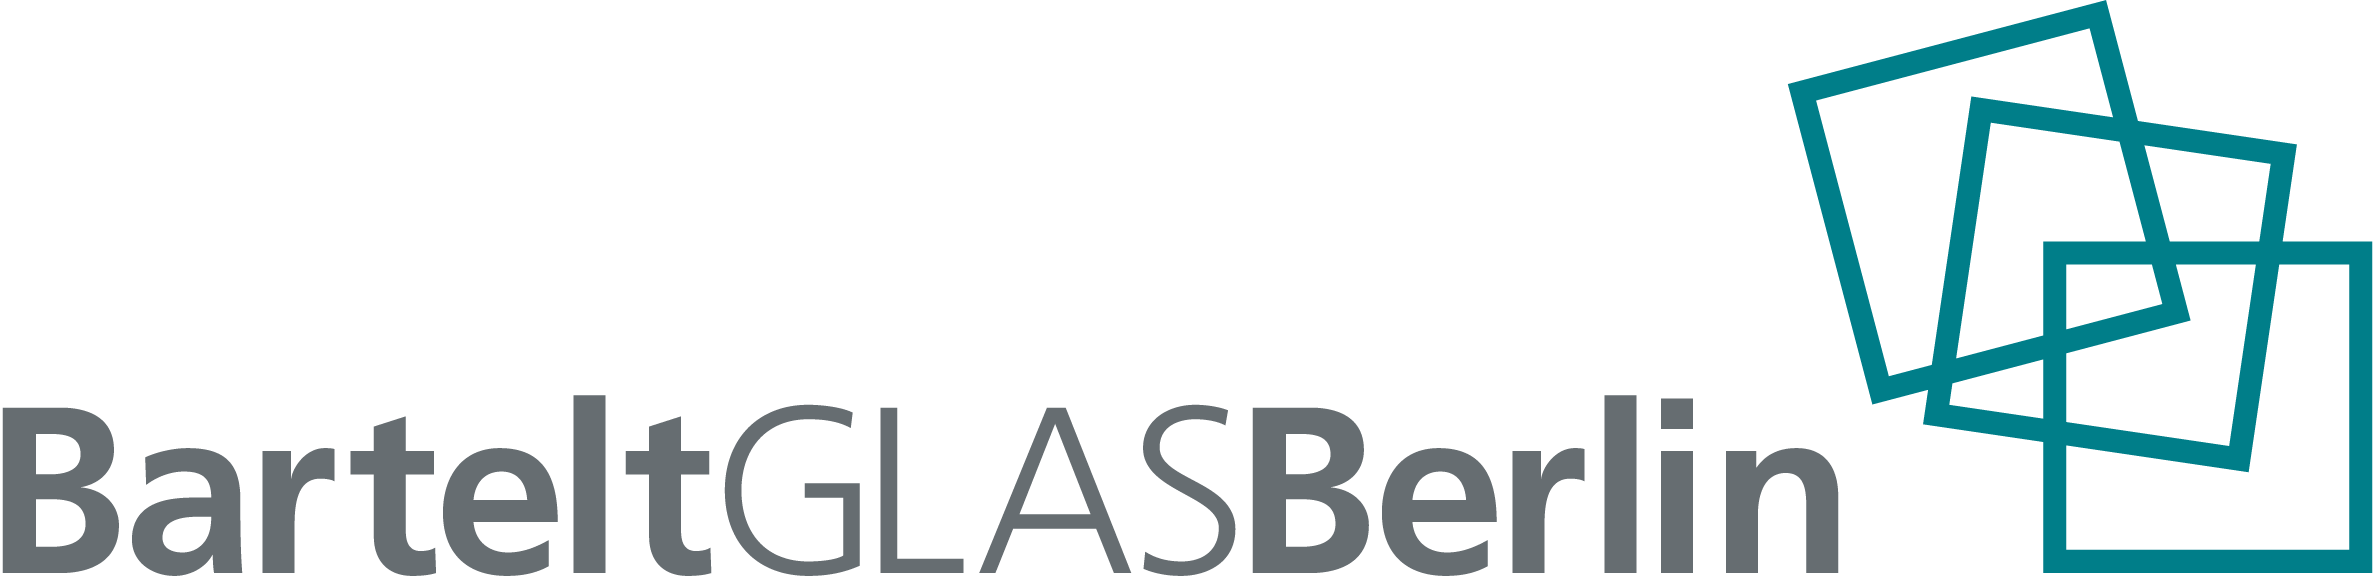 bartelt-glas-berlin-logo